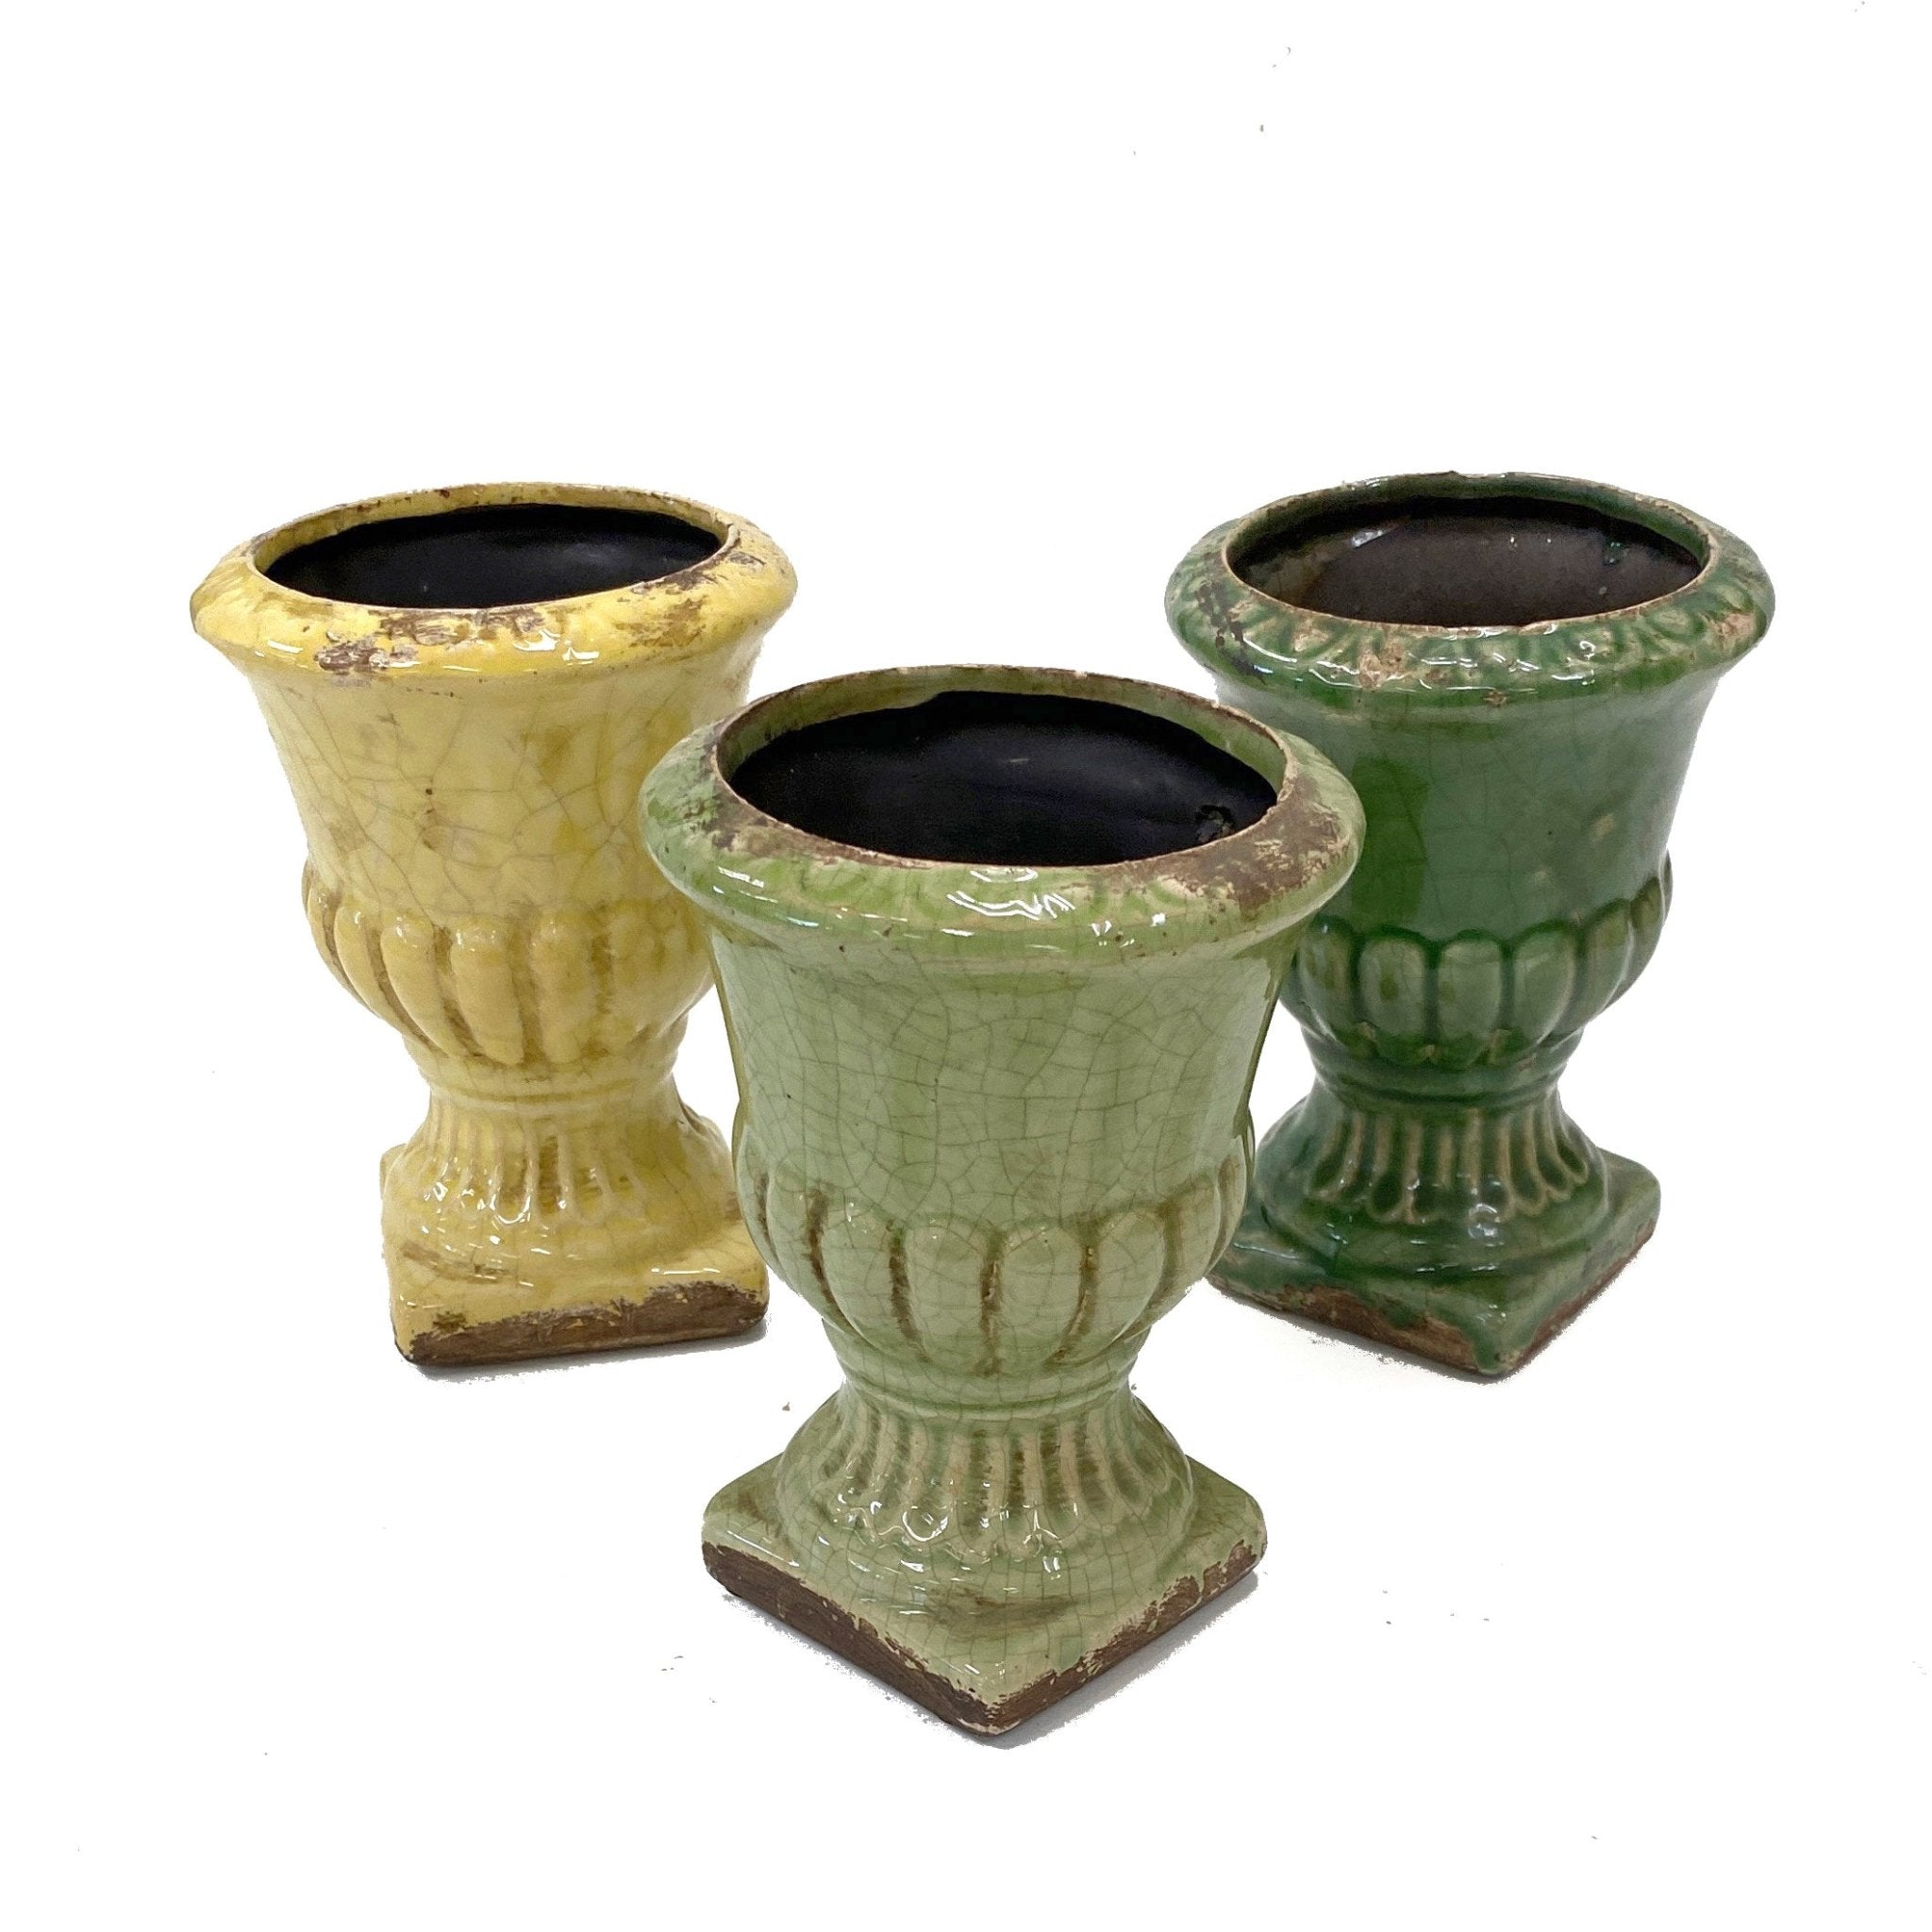 Hunziker Ceramic Pot Planter Rosecliff Heights Size: 24 H x 28 W x 28 D